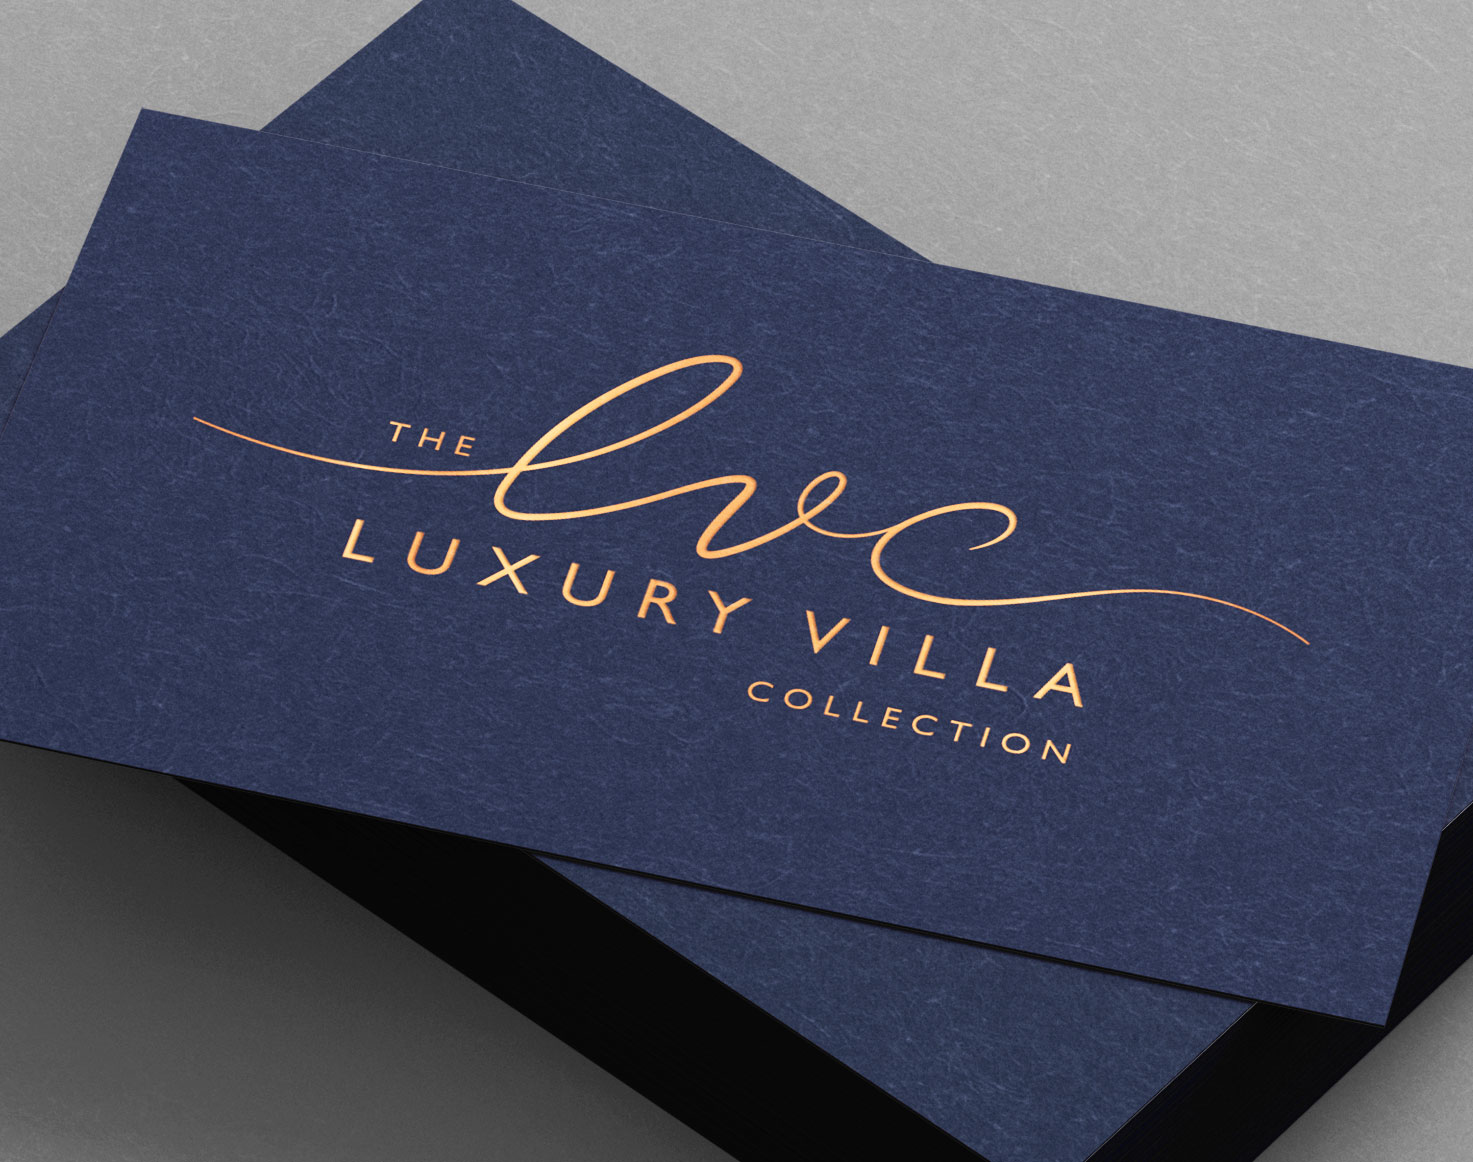 Luxury villa company logo and branding